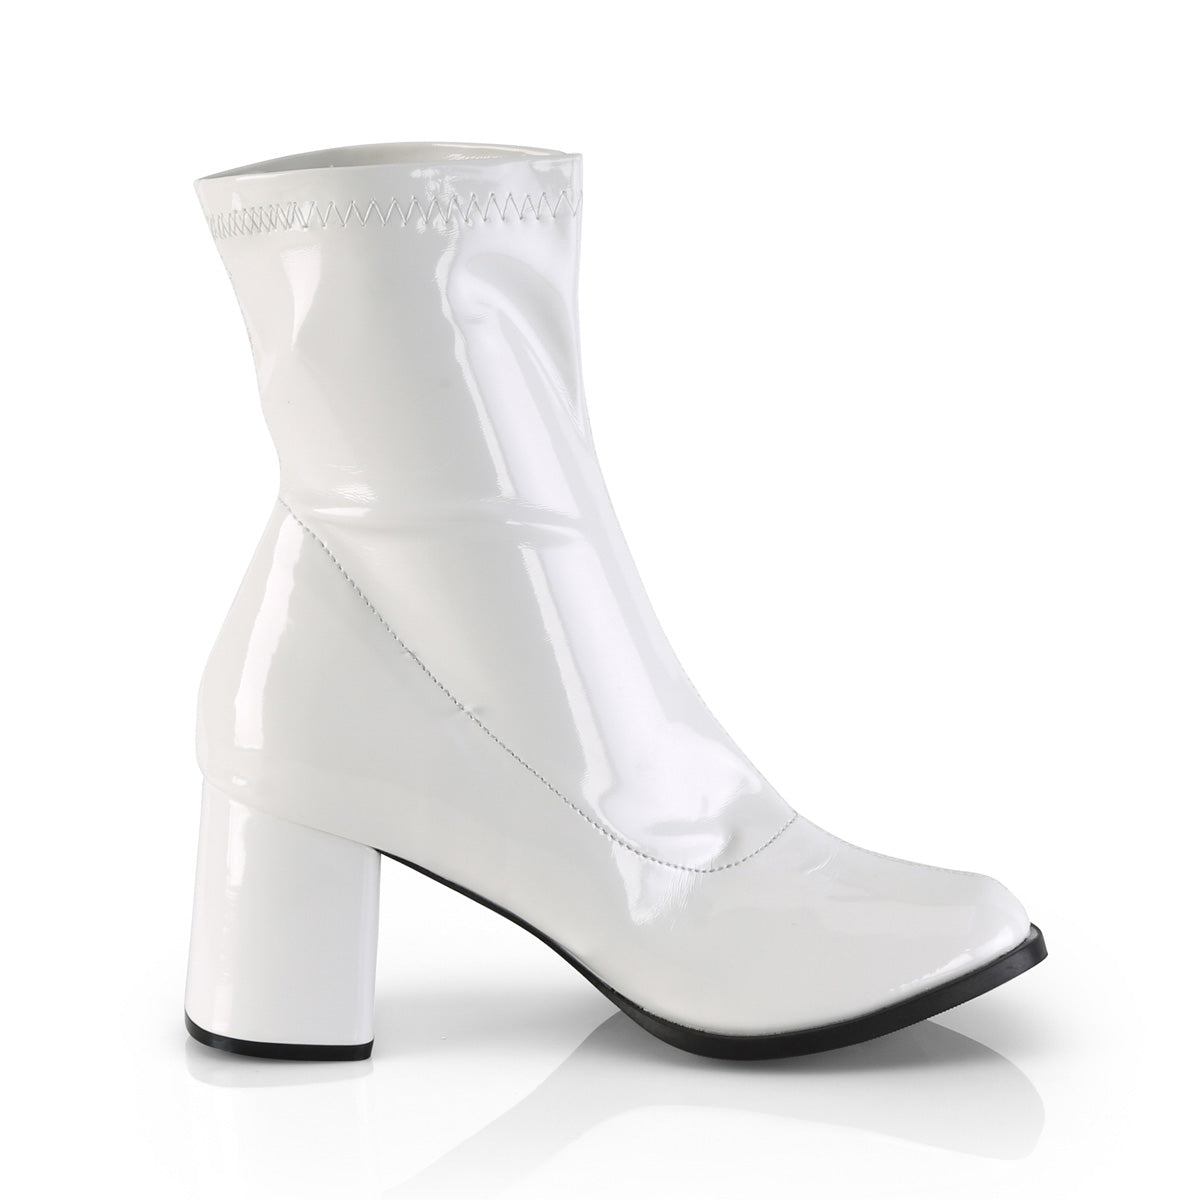 GOGO-150 3 Inch Heel White Women's Boots Funtasma Costume Shoes Fancy Dress